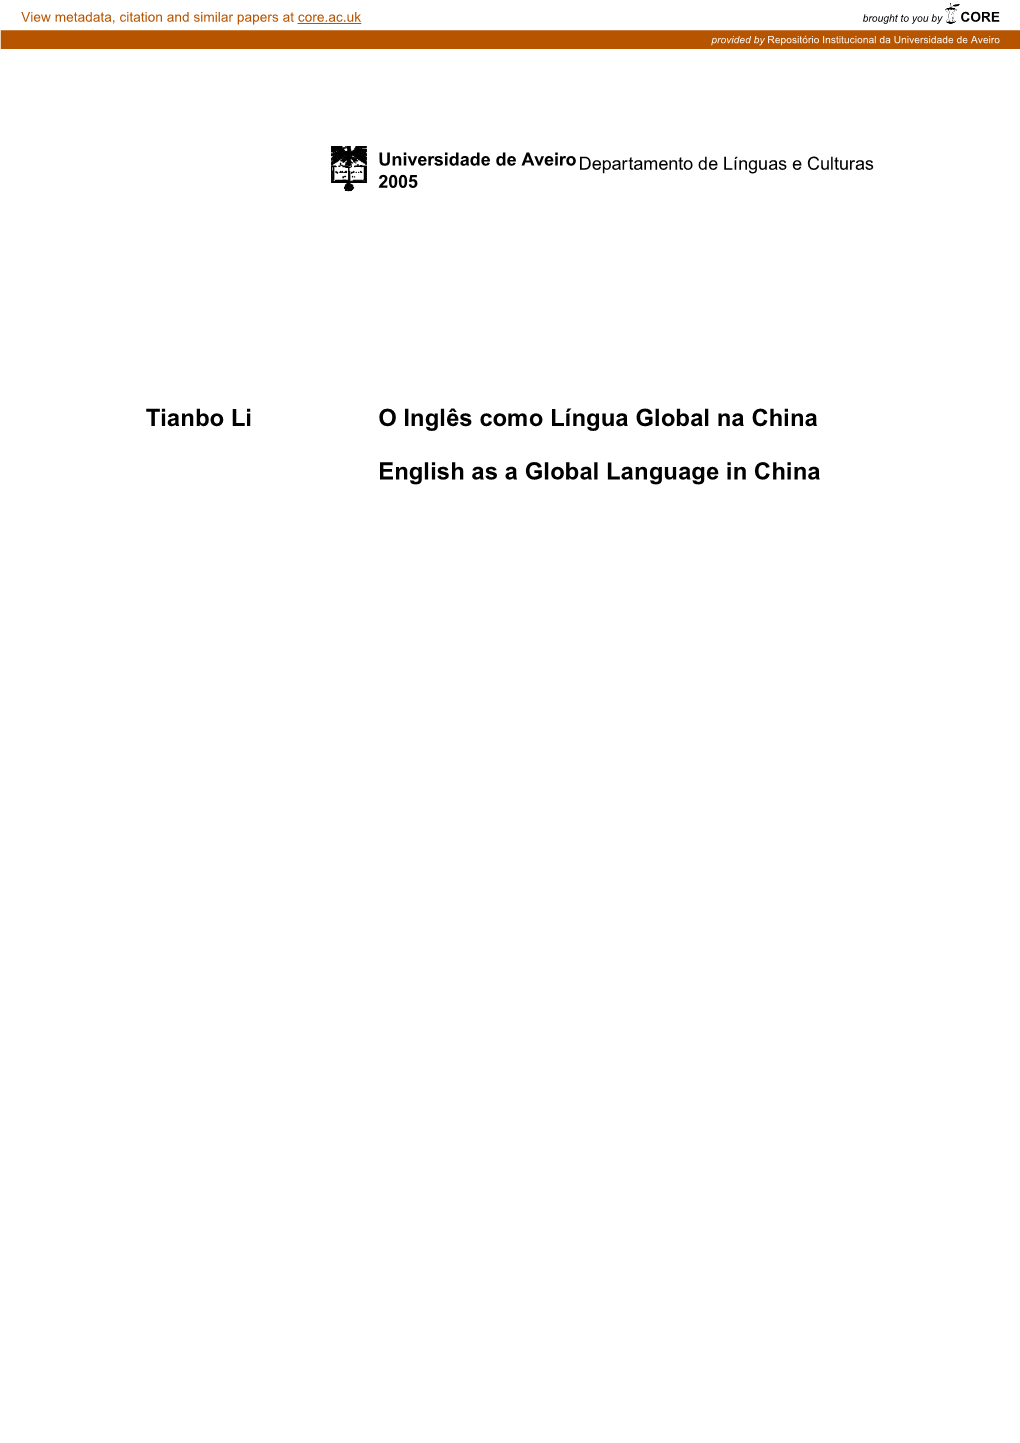 Tianbo Li O Inglês Como Língua Global Na China English As a Global Language in China